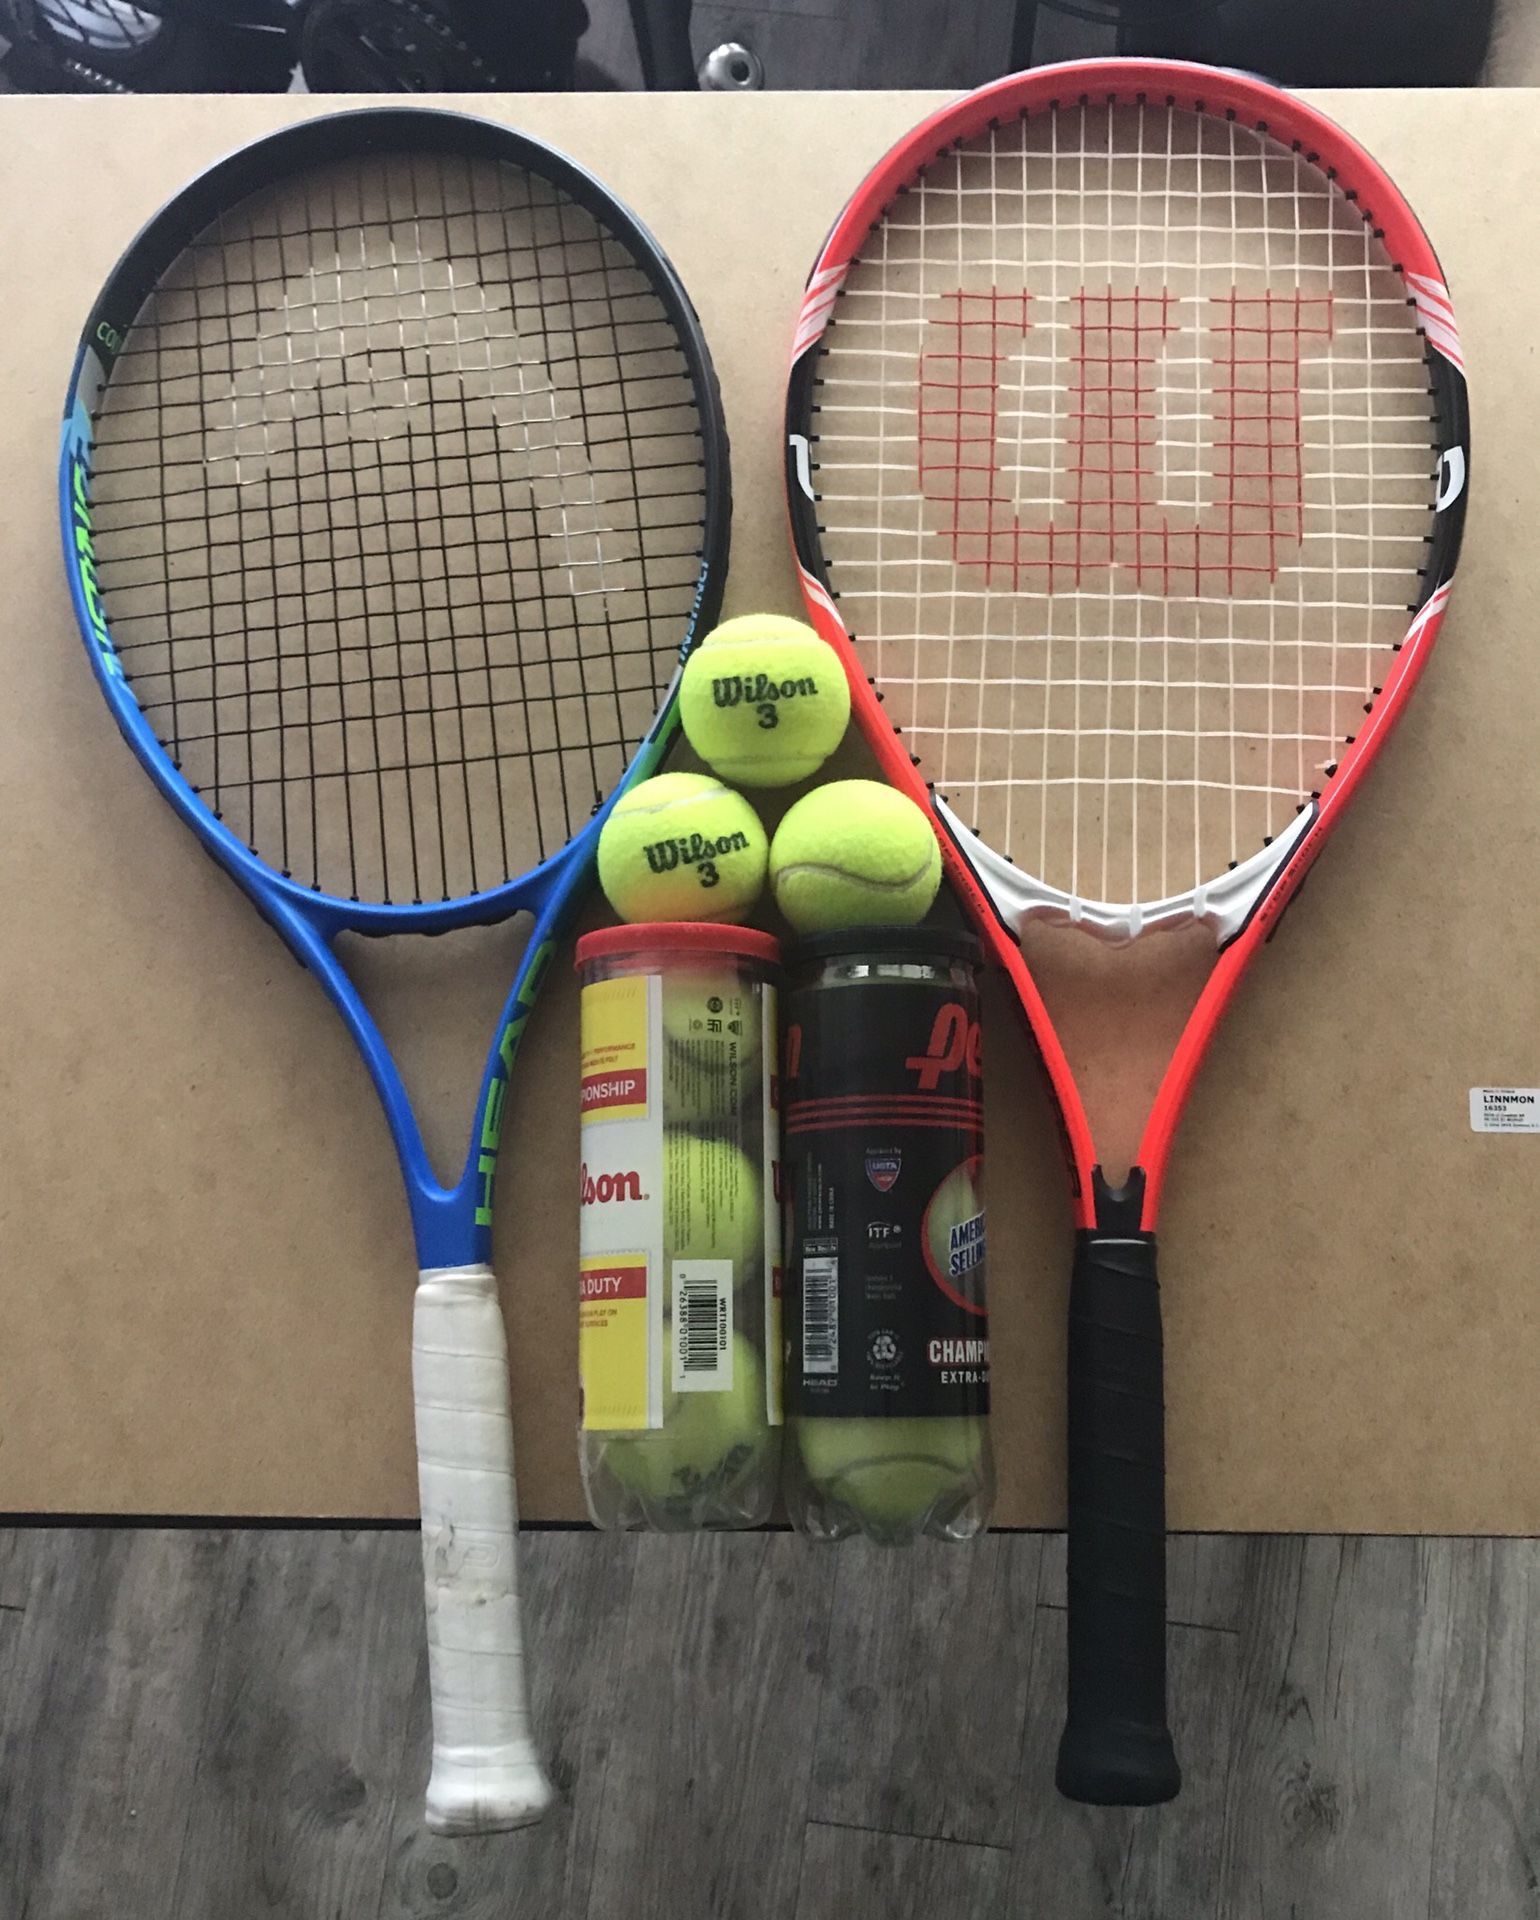 Two tennis rackets &8 tennis balls